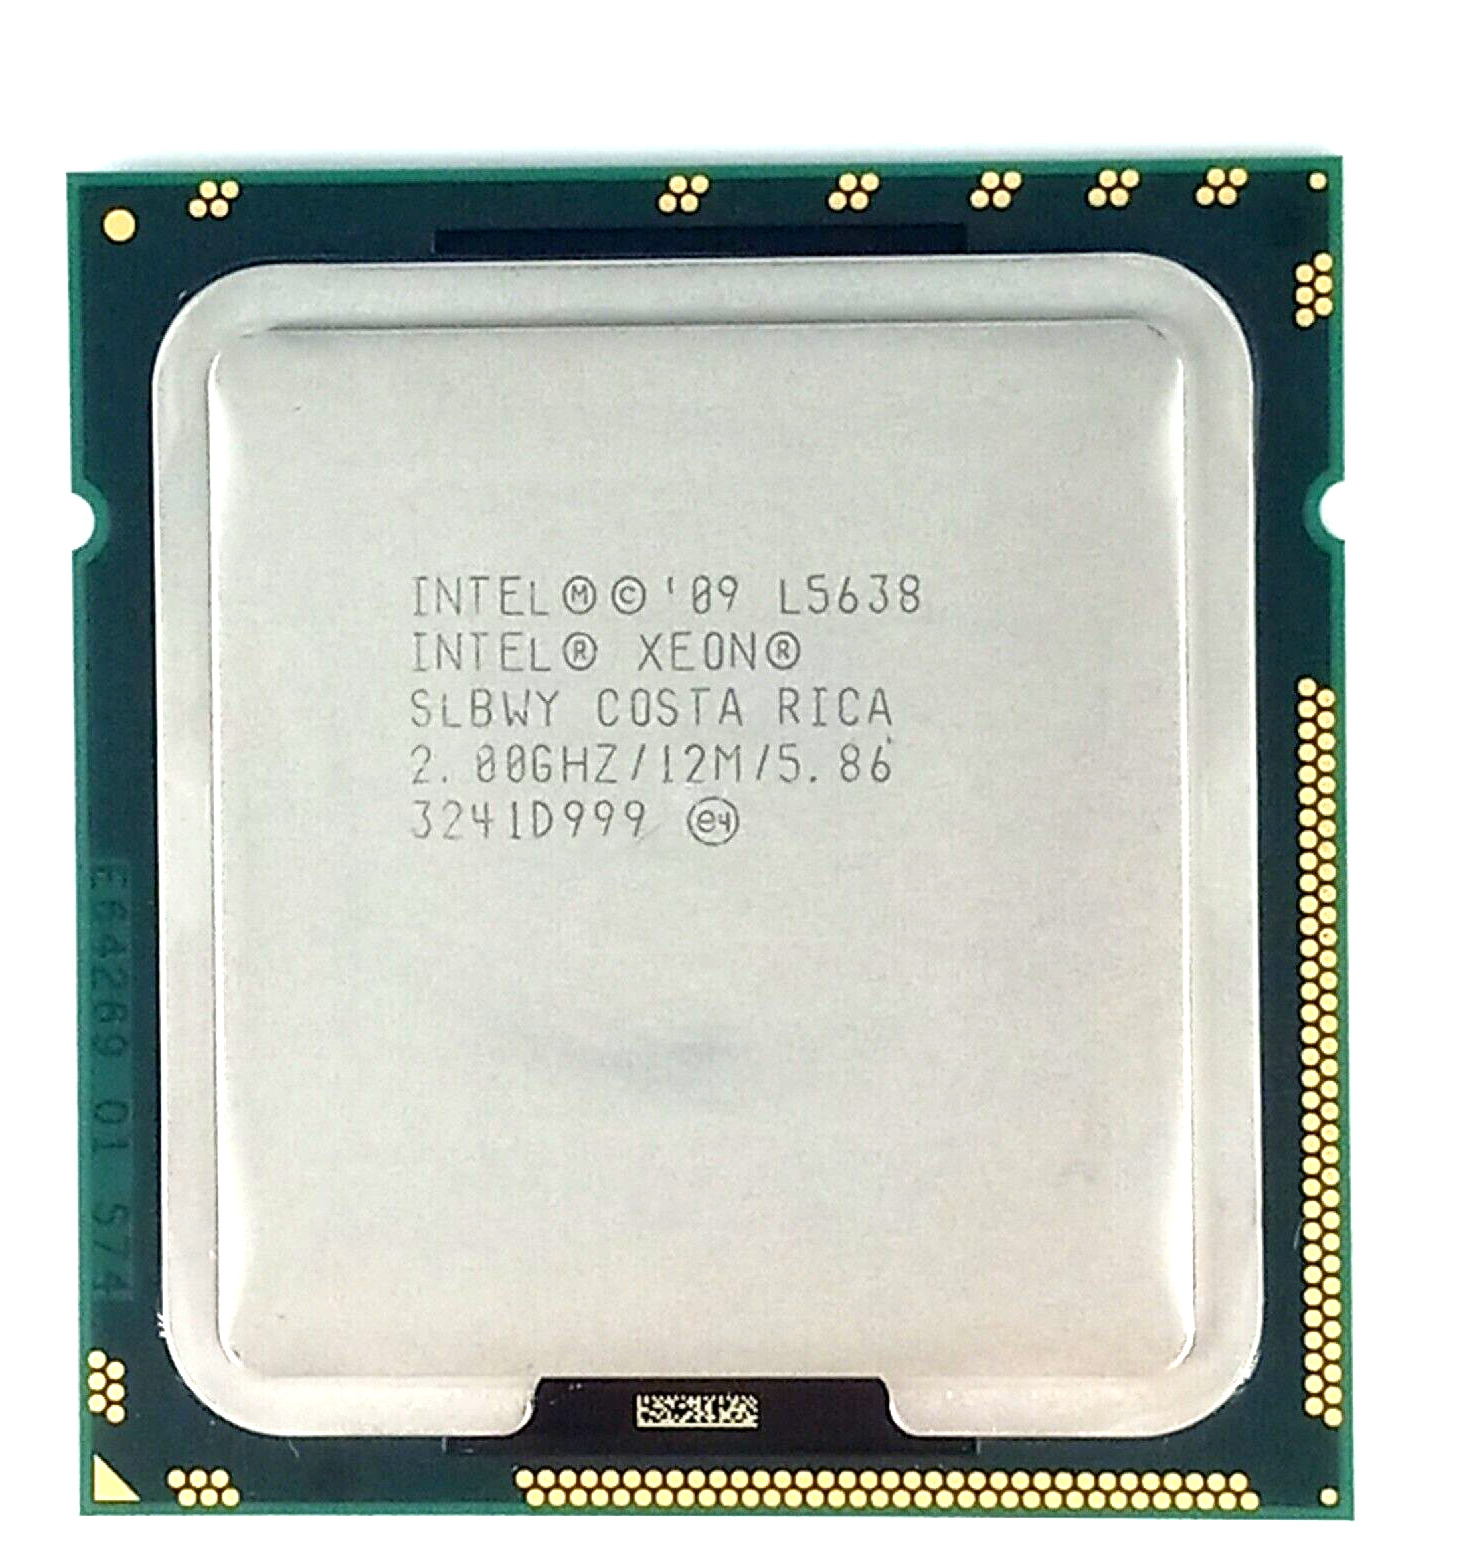 Intel Xeon L5638 2.00GHz 6-Core 12MB LGA1366 Server Processor CPU SLBWY